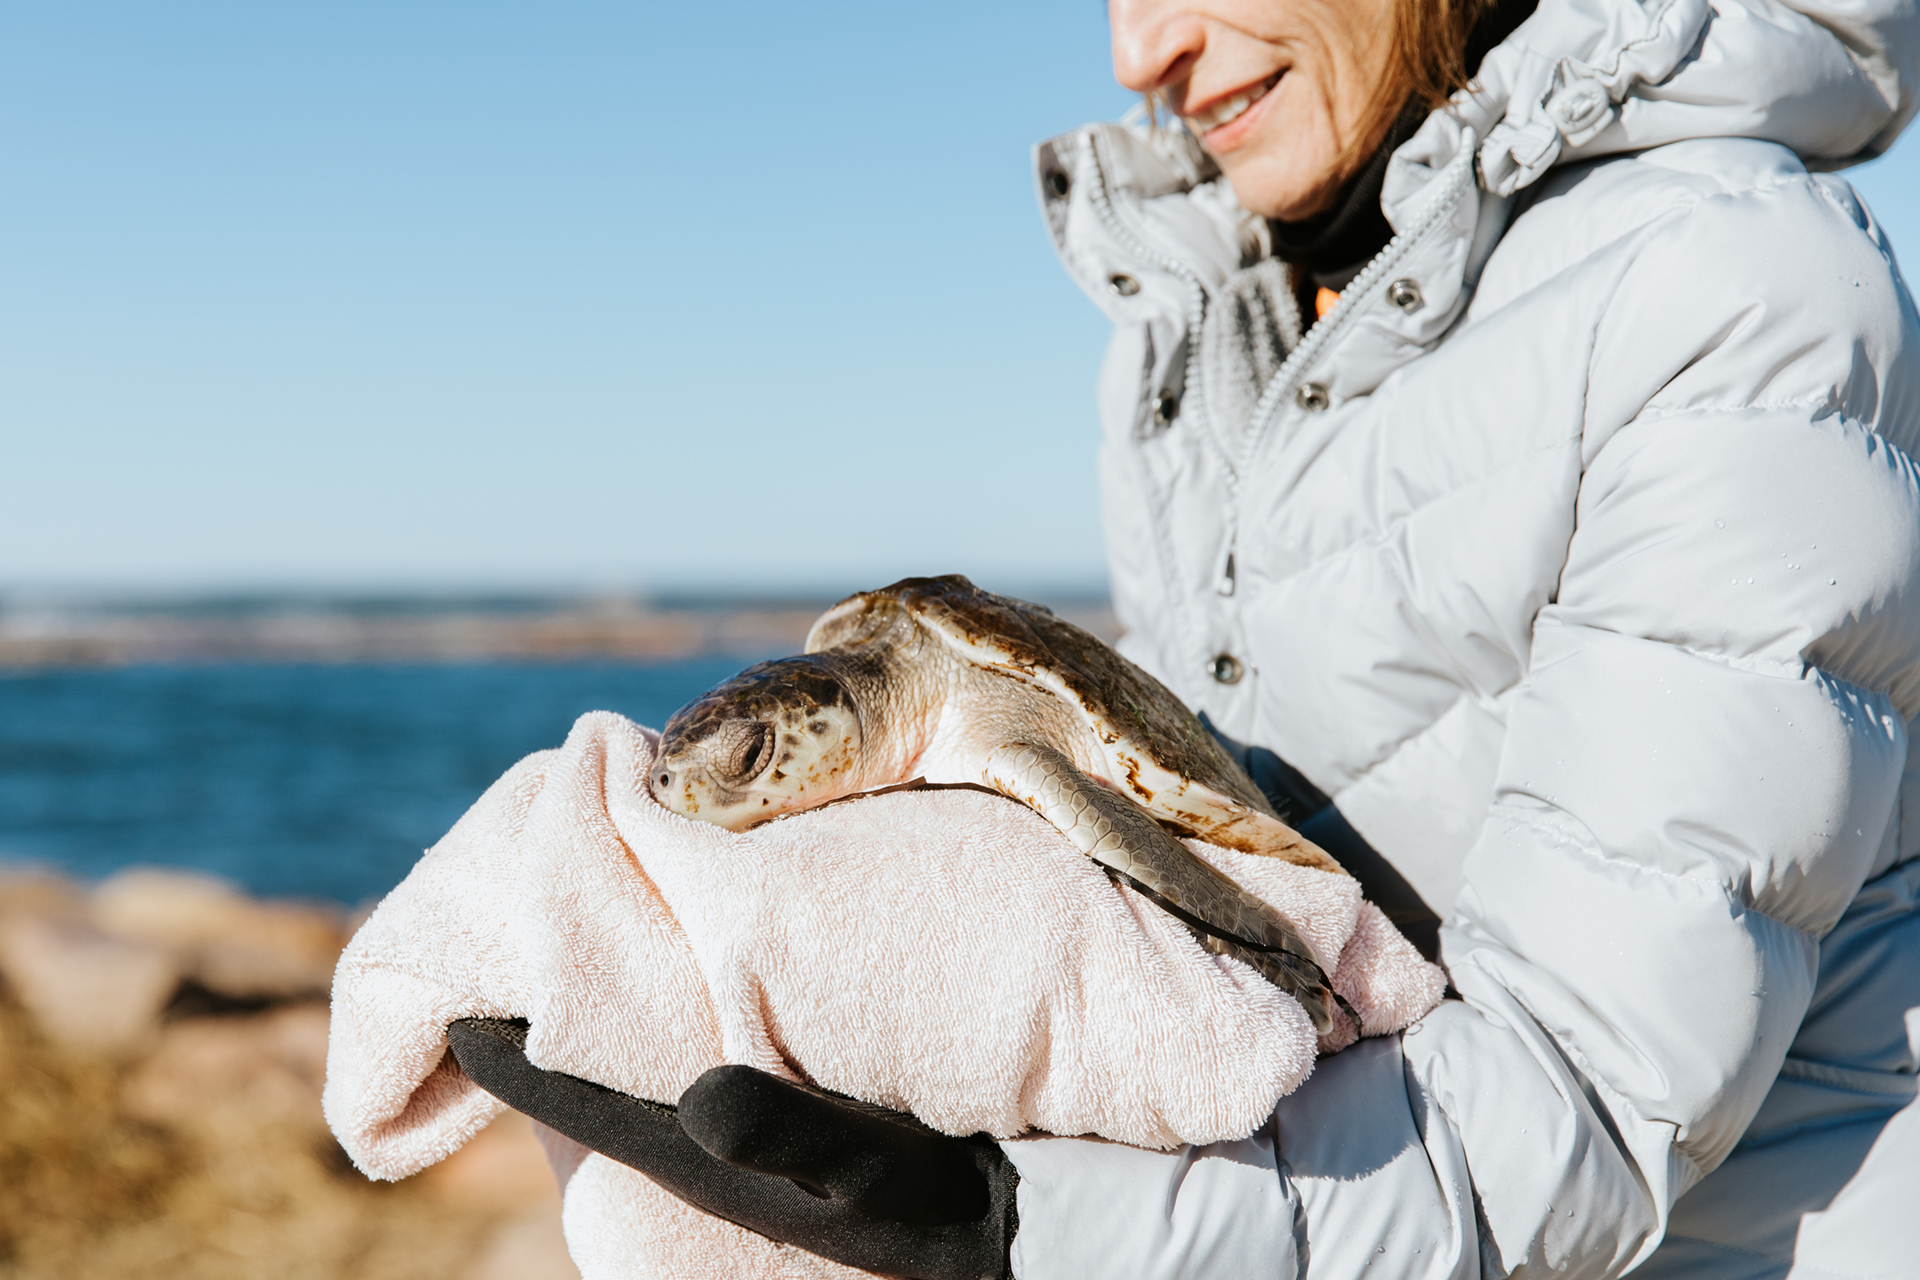 Wellfleet Bay staffer holding a sea turtle in a towel